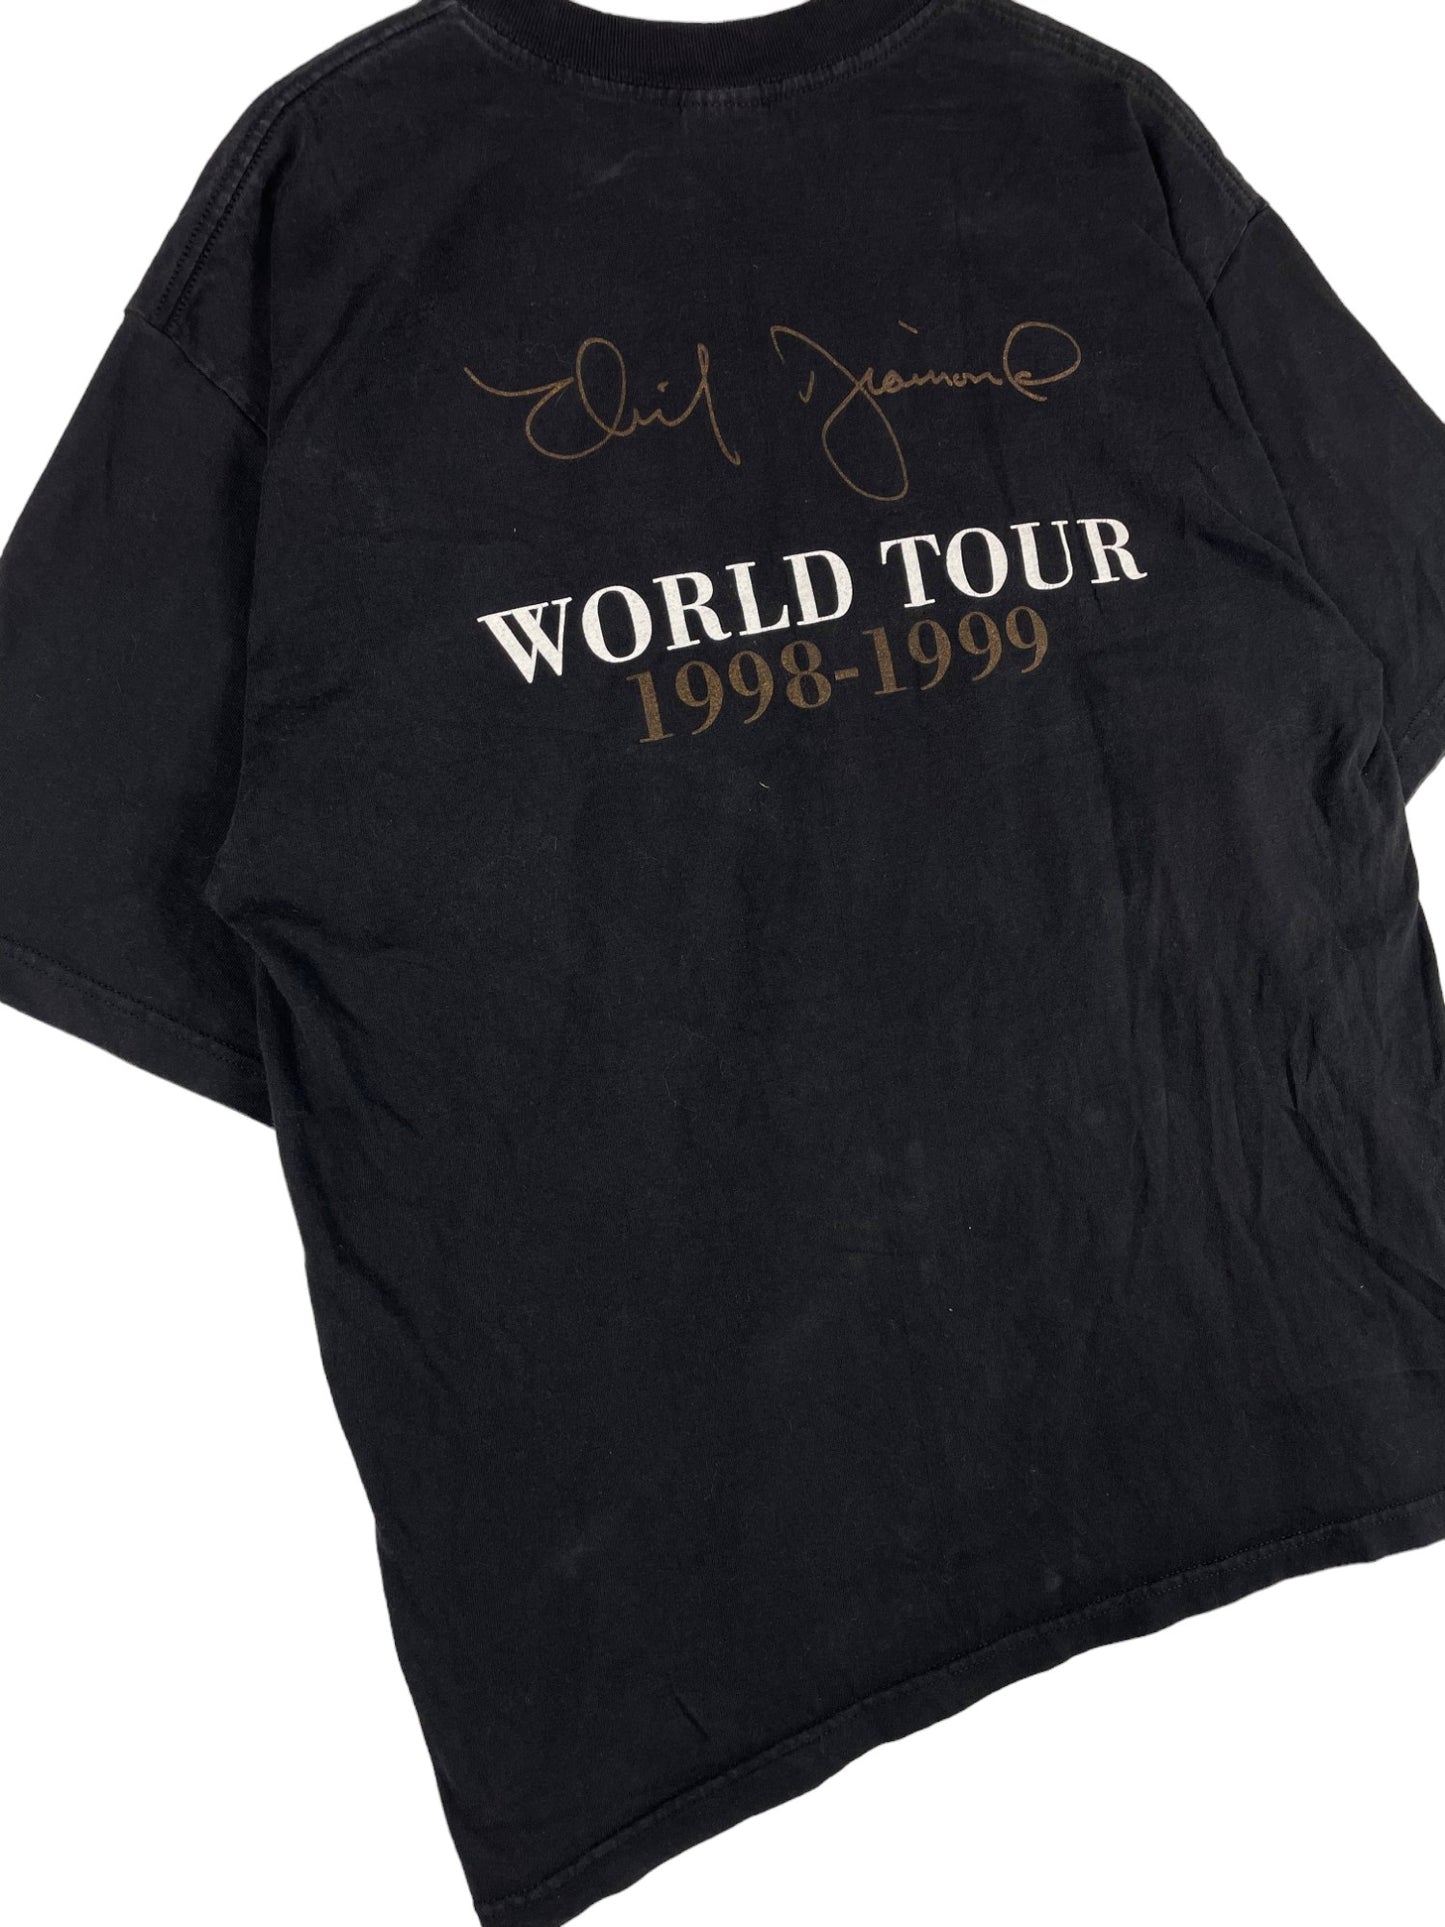 Neil Diamond 1998 Tour T-SHirt